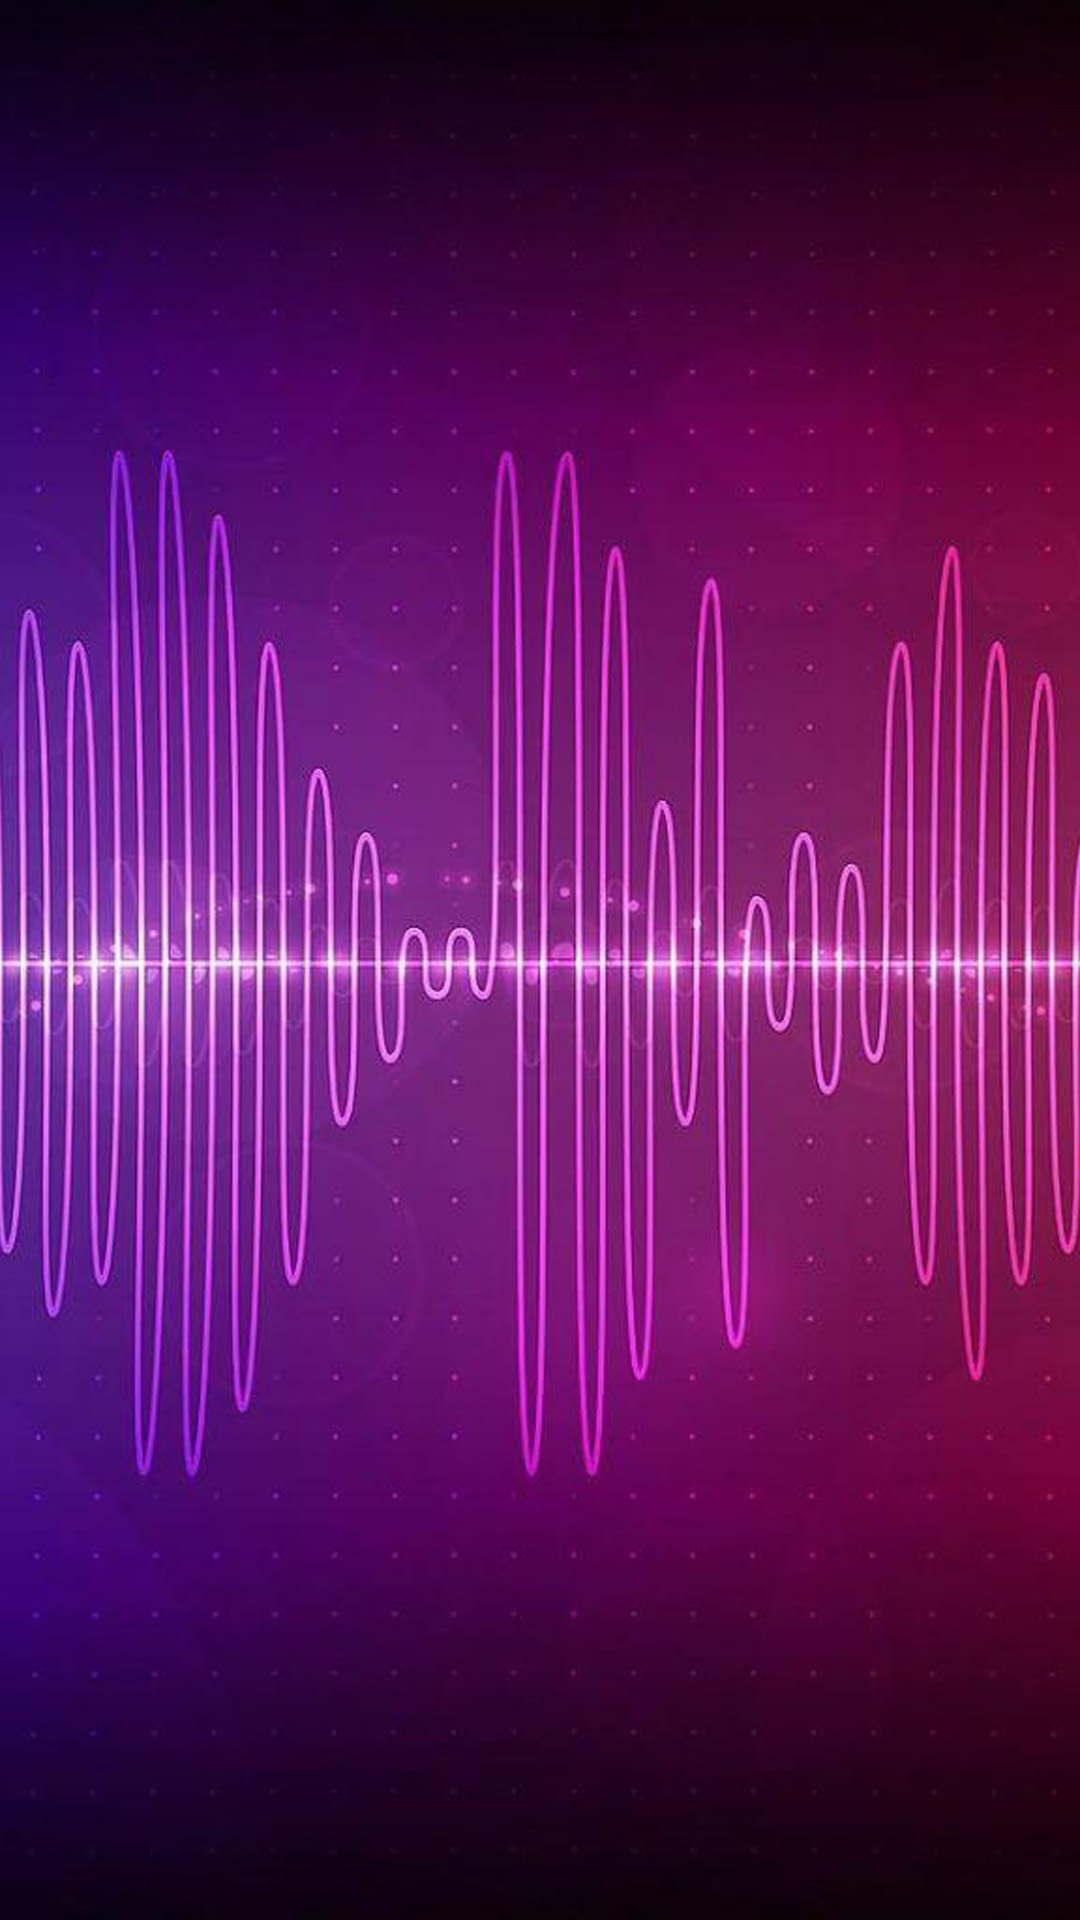 Audio Oscillation Galaxy S5 Wallpaper Samsung